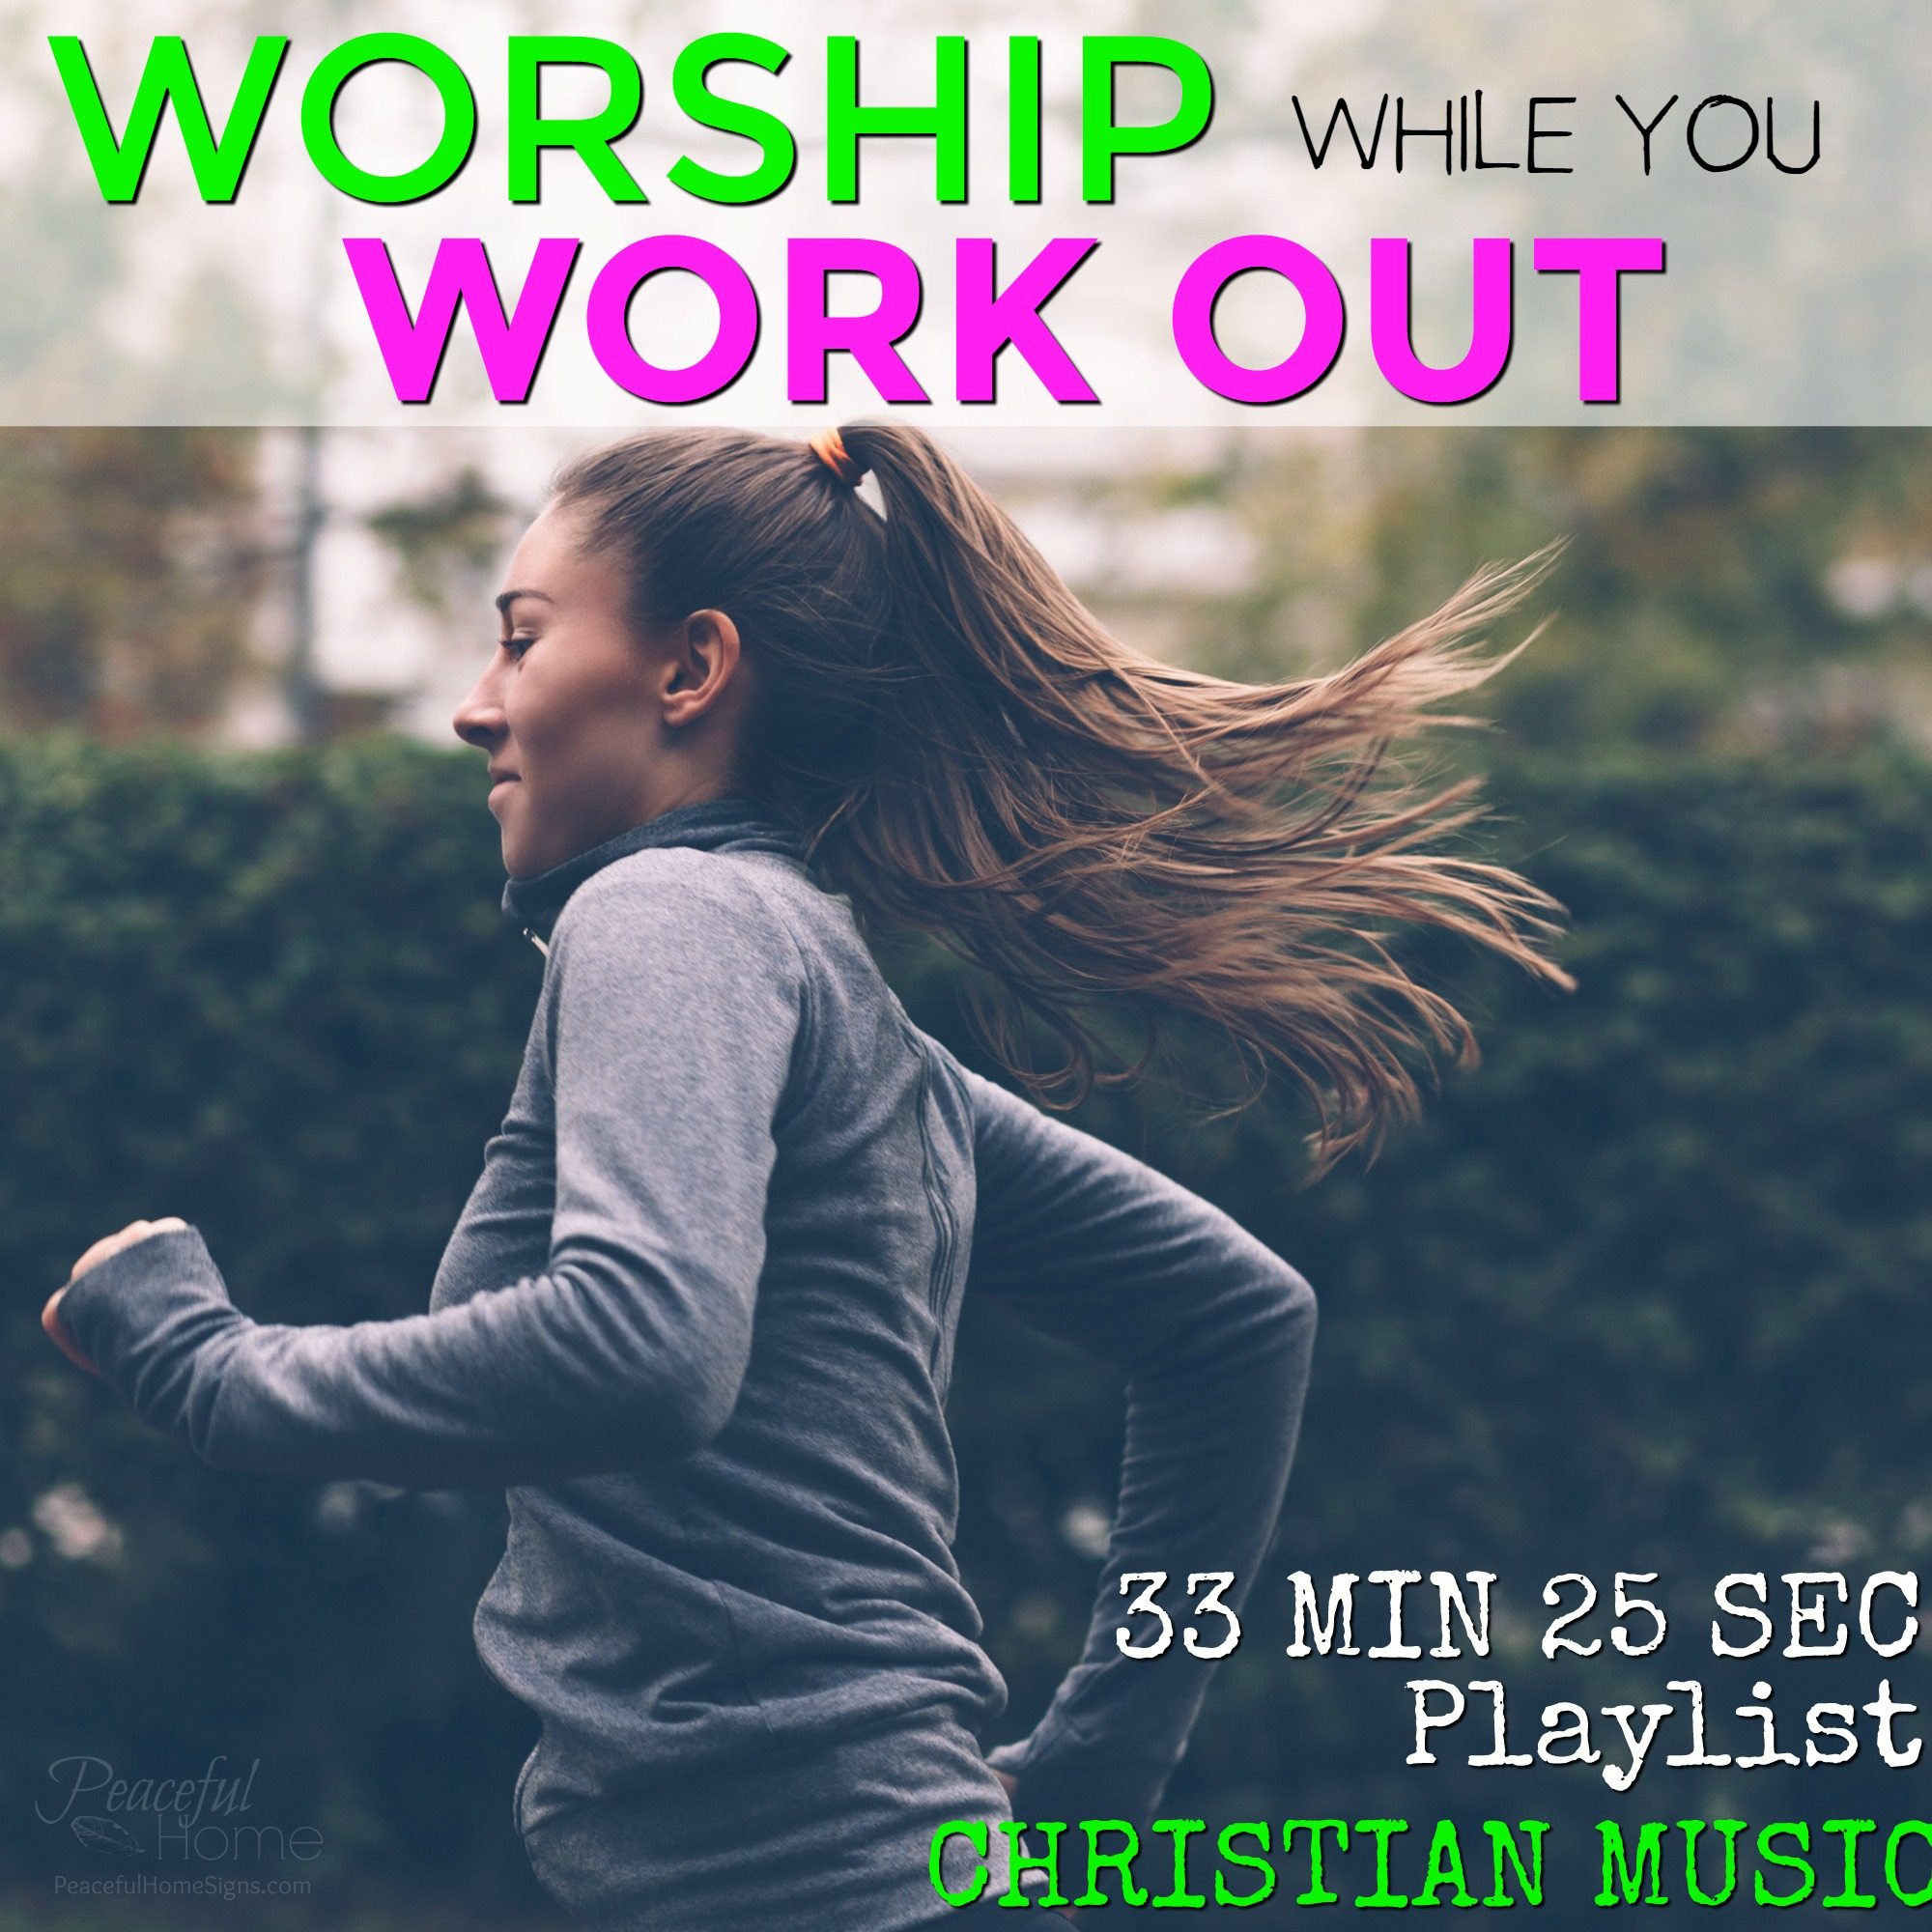 Workout Worship List 1